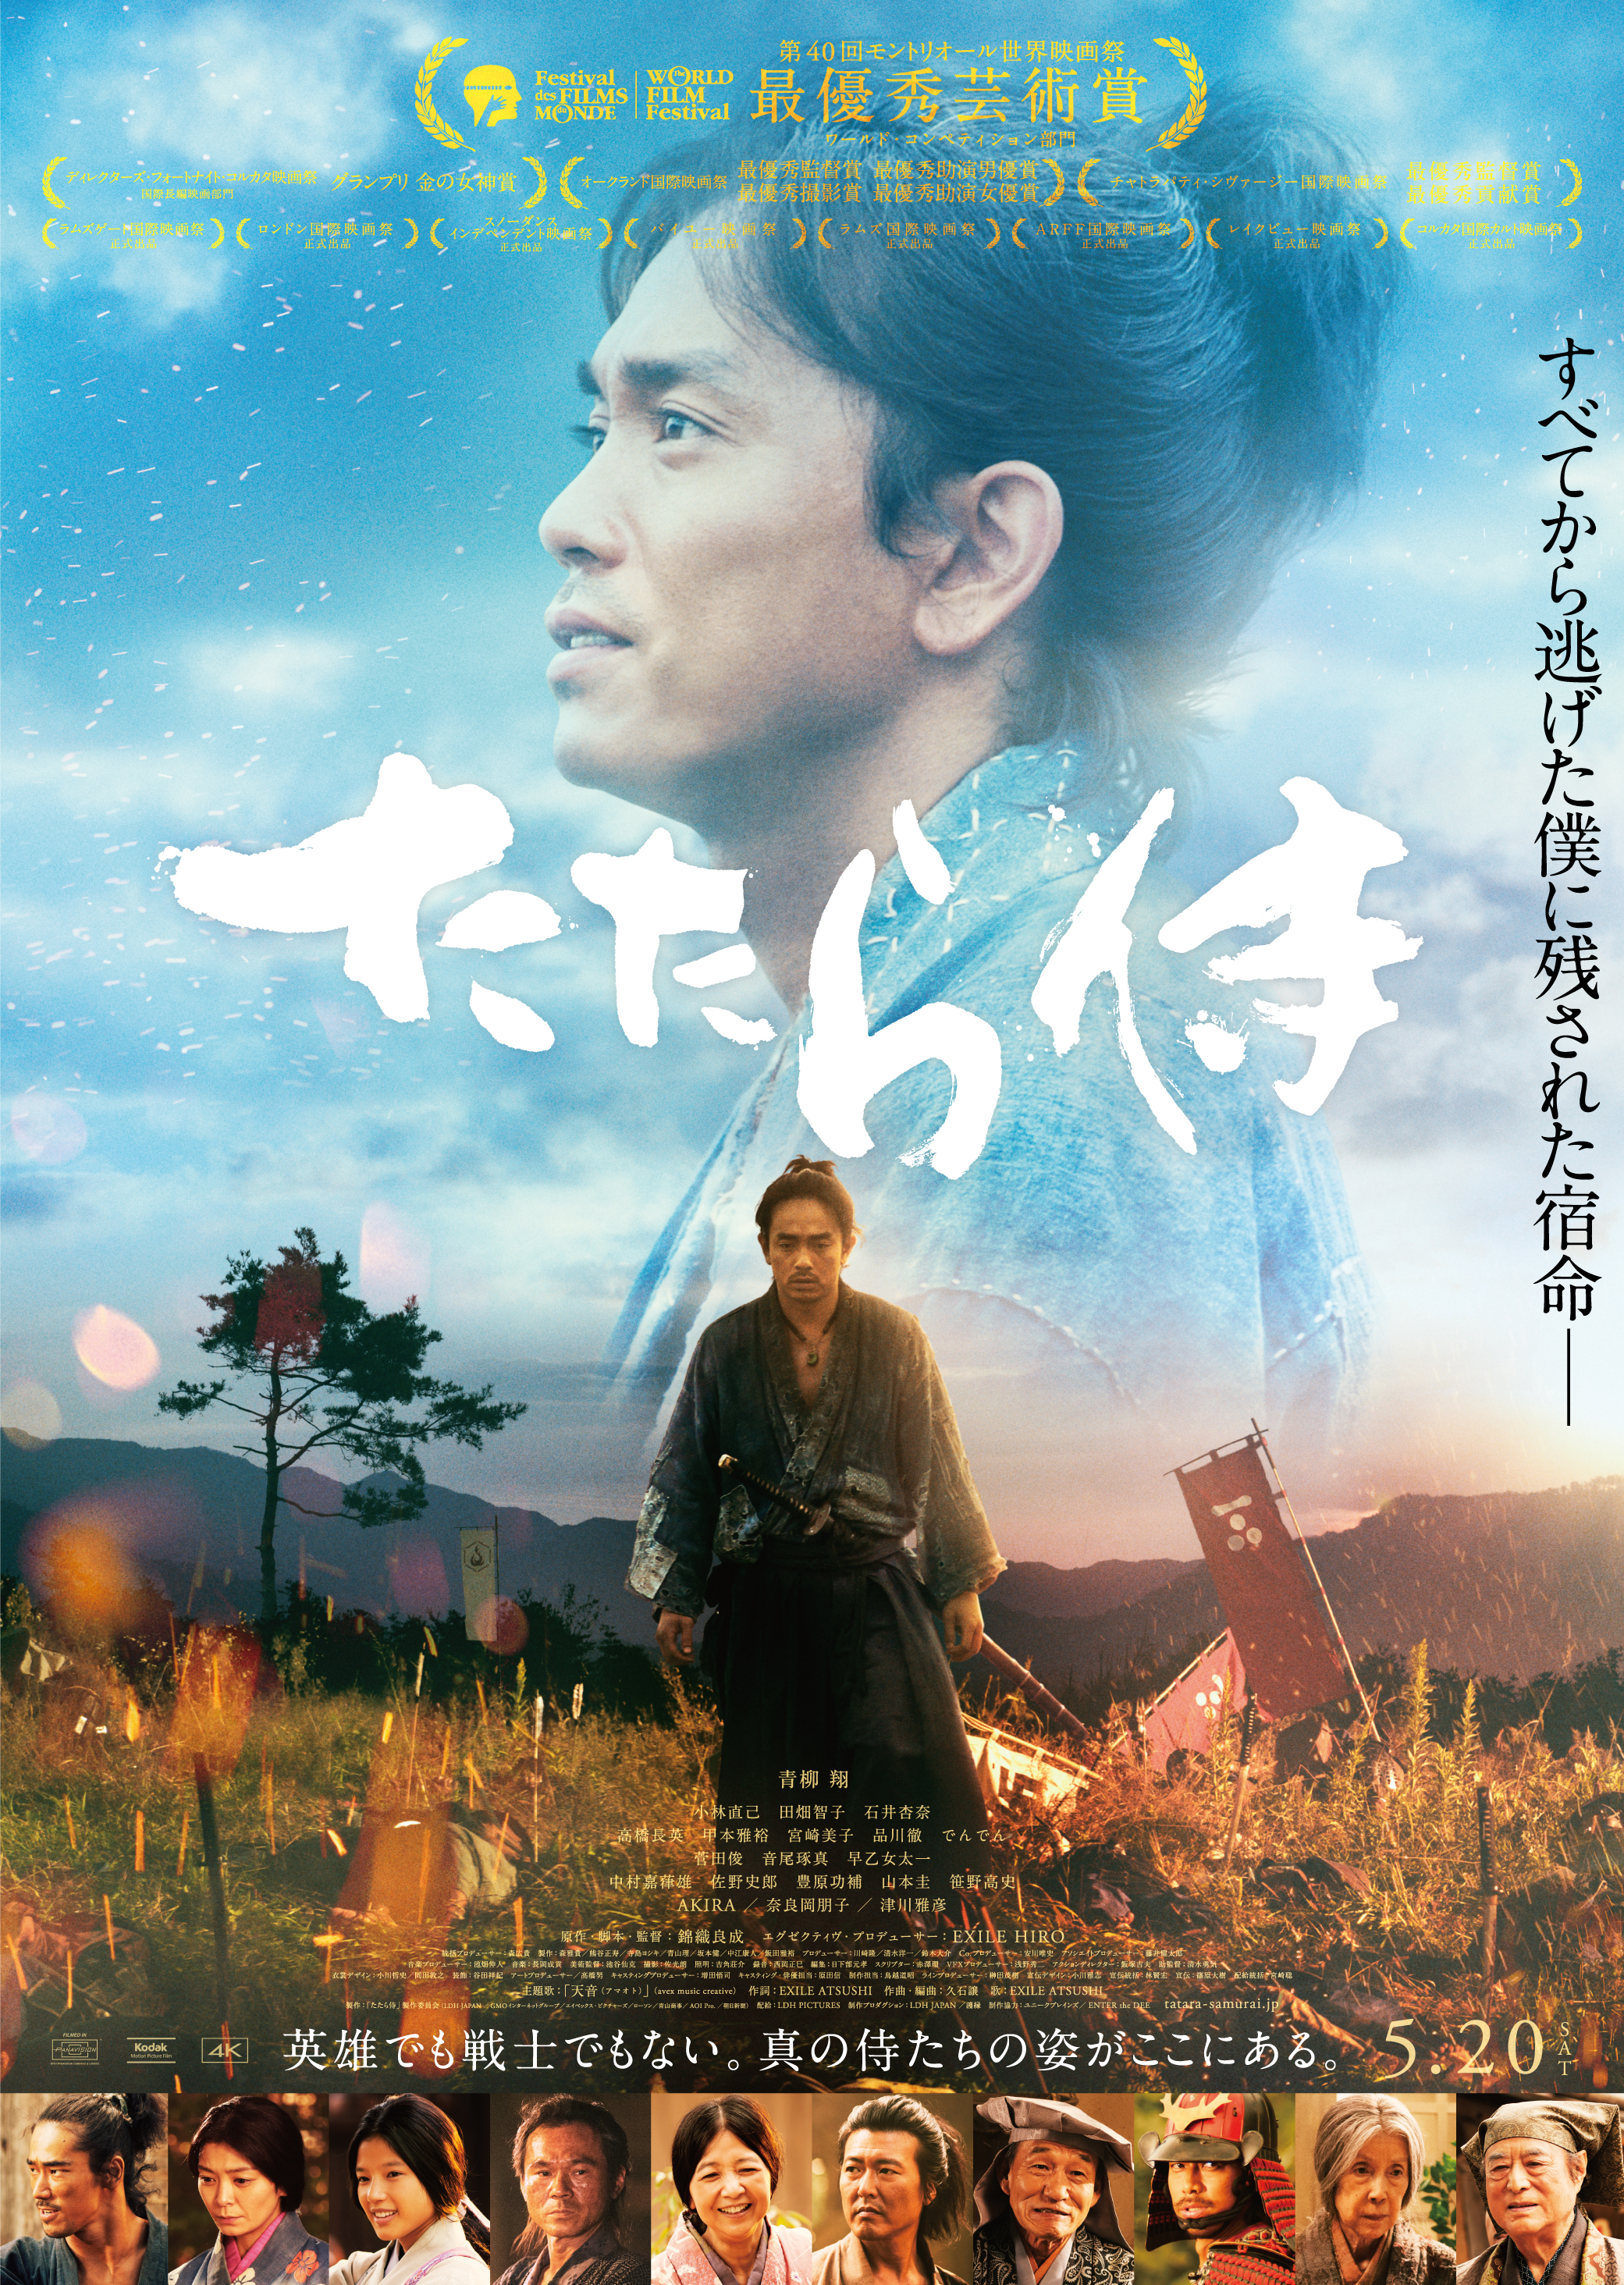 Tatara Samurai Poster 2